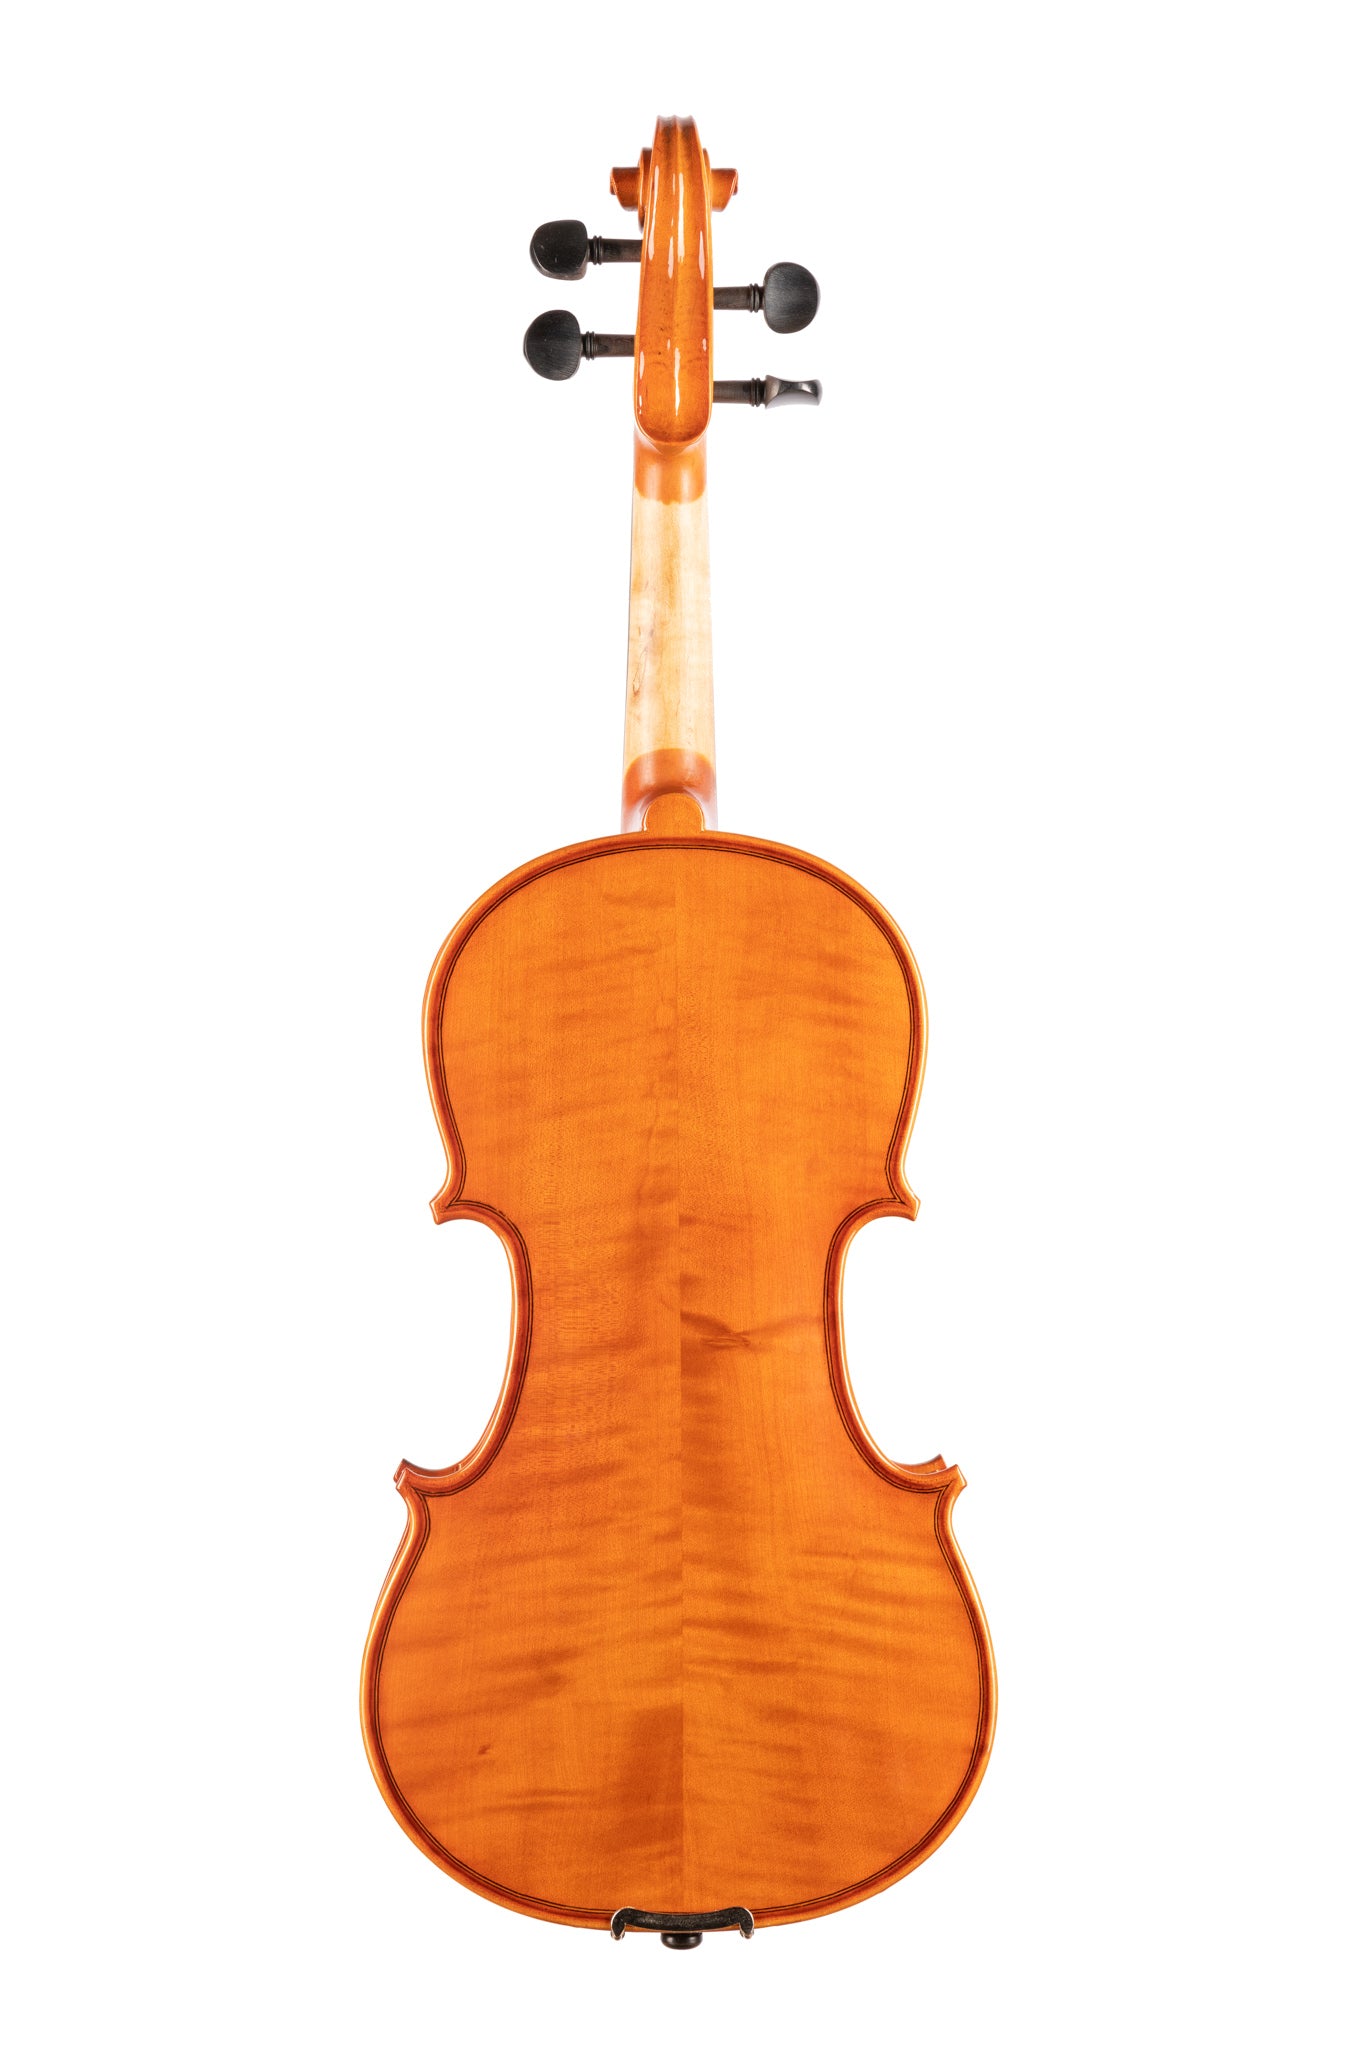 WY-230 實木中提琴